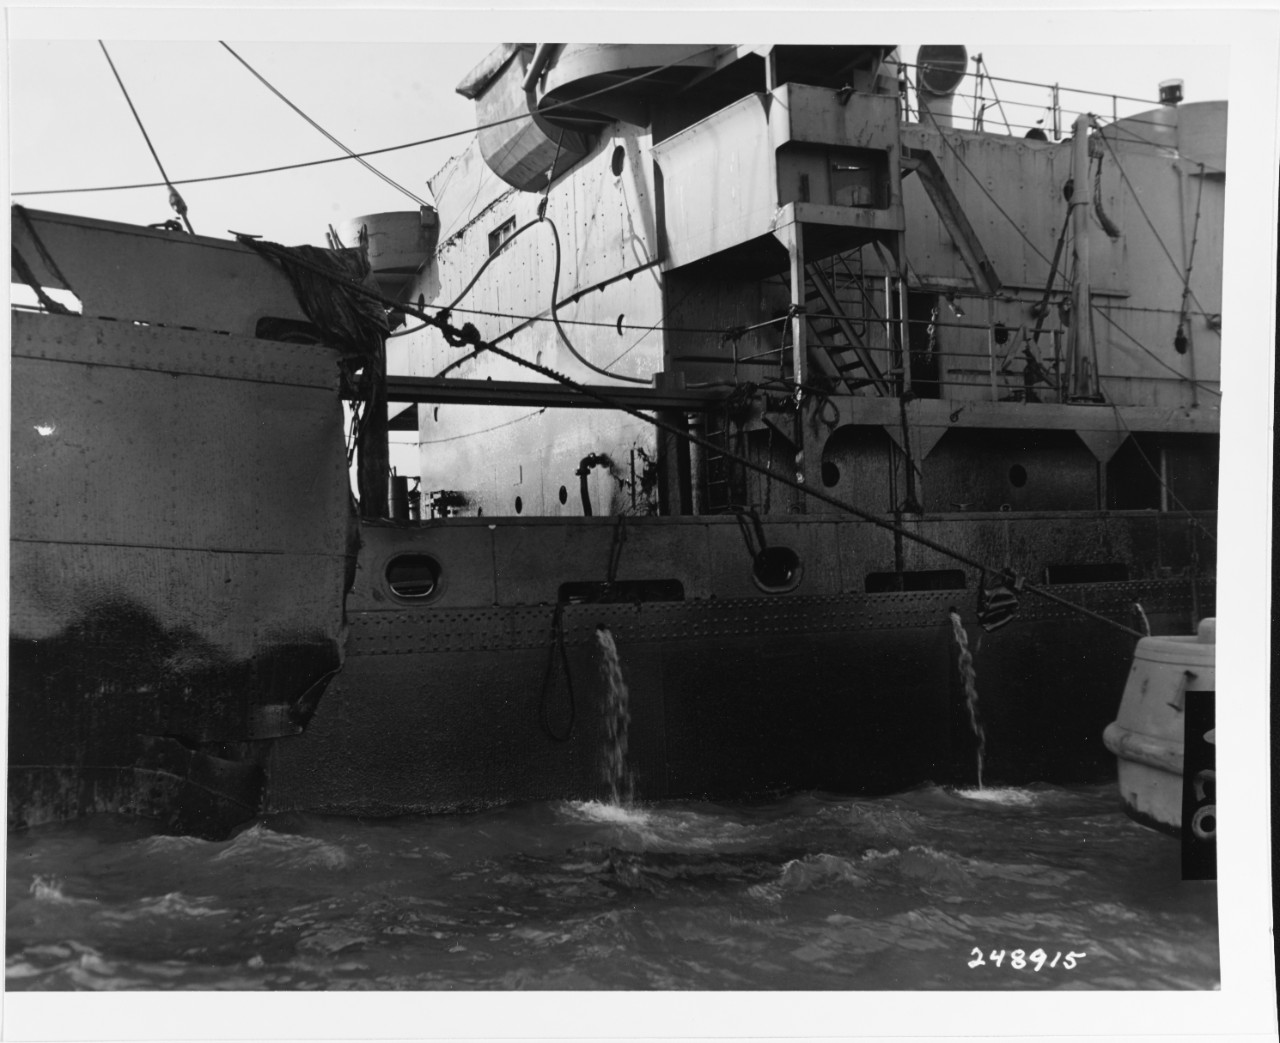 S.S. LEE S. OVERMAN ("Liberty" Ship), December 24, 1944